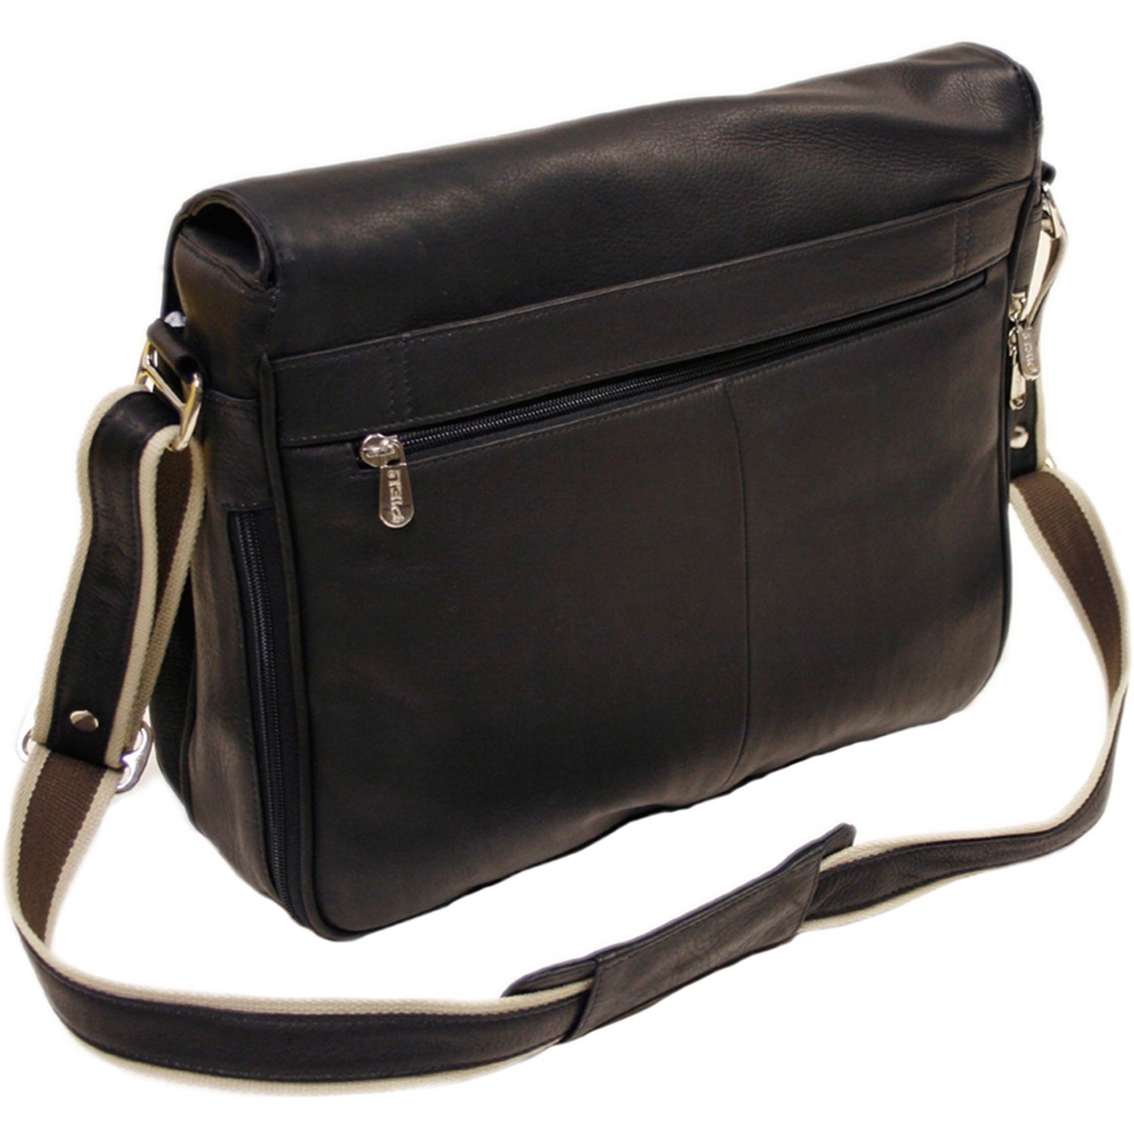 Piel Leather Expandable Messenger Bag - Image 2 of 3